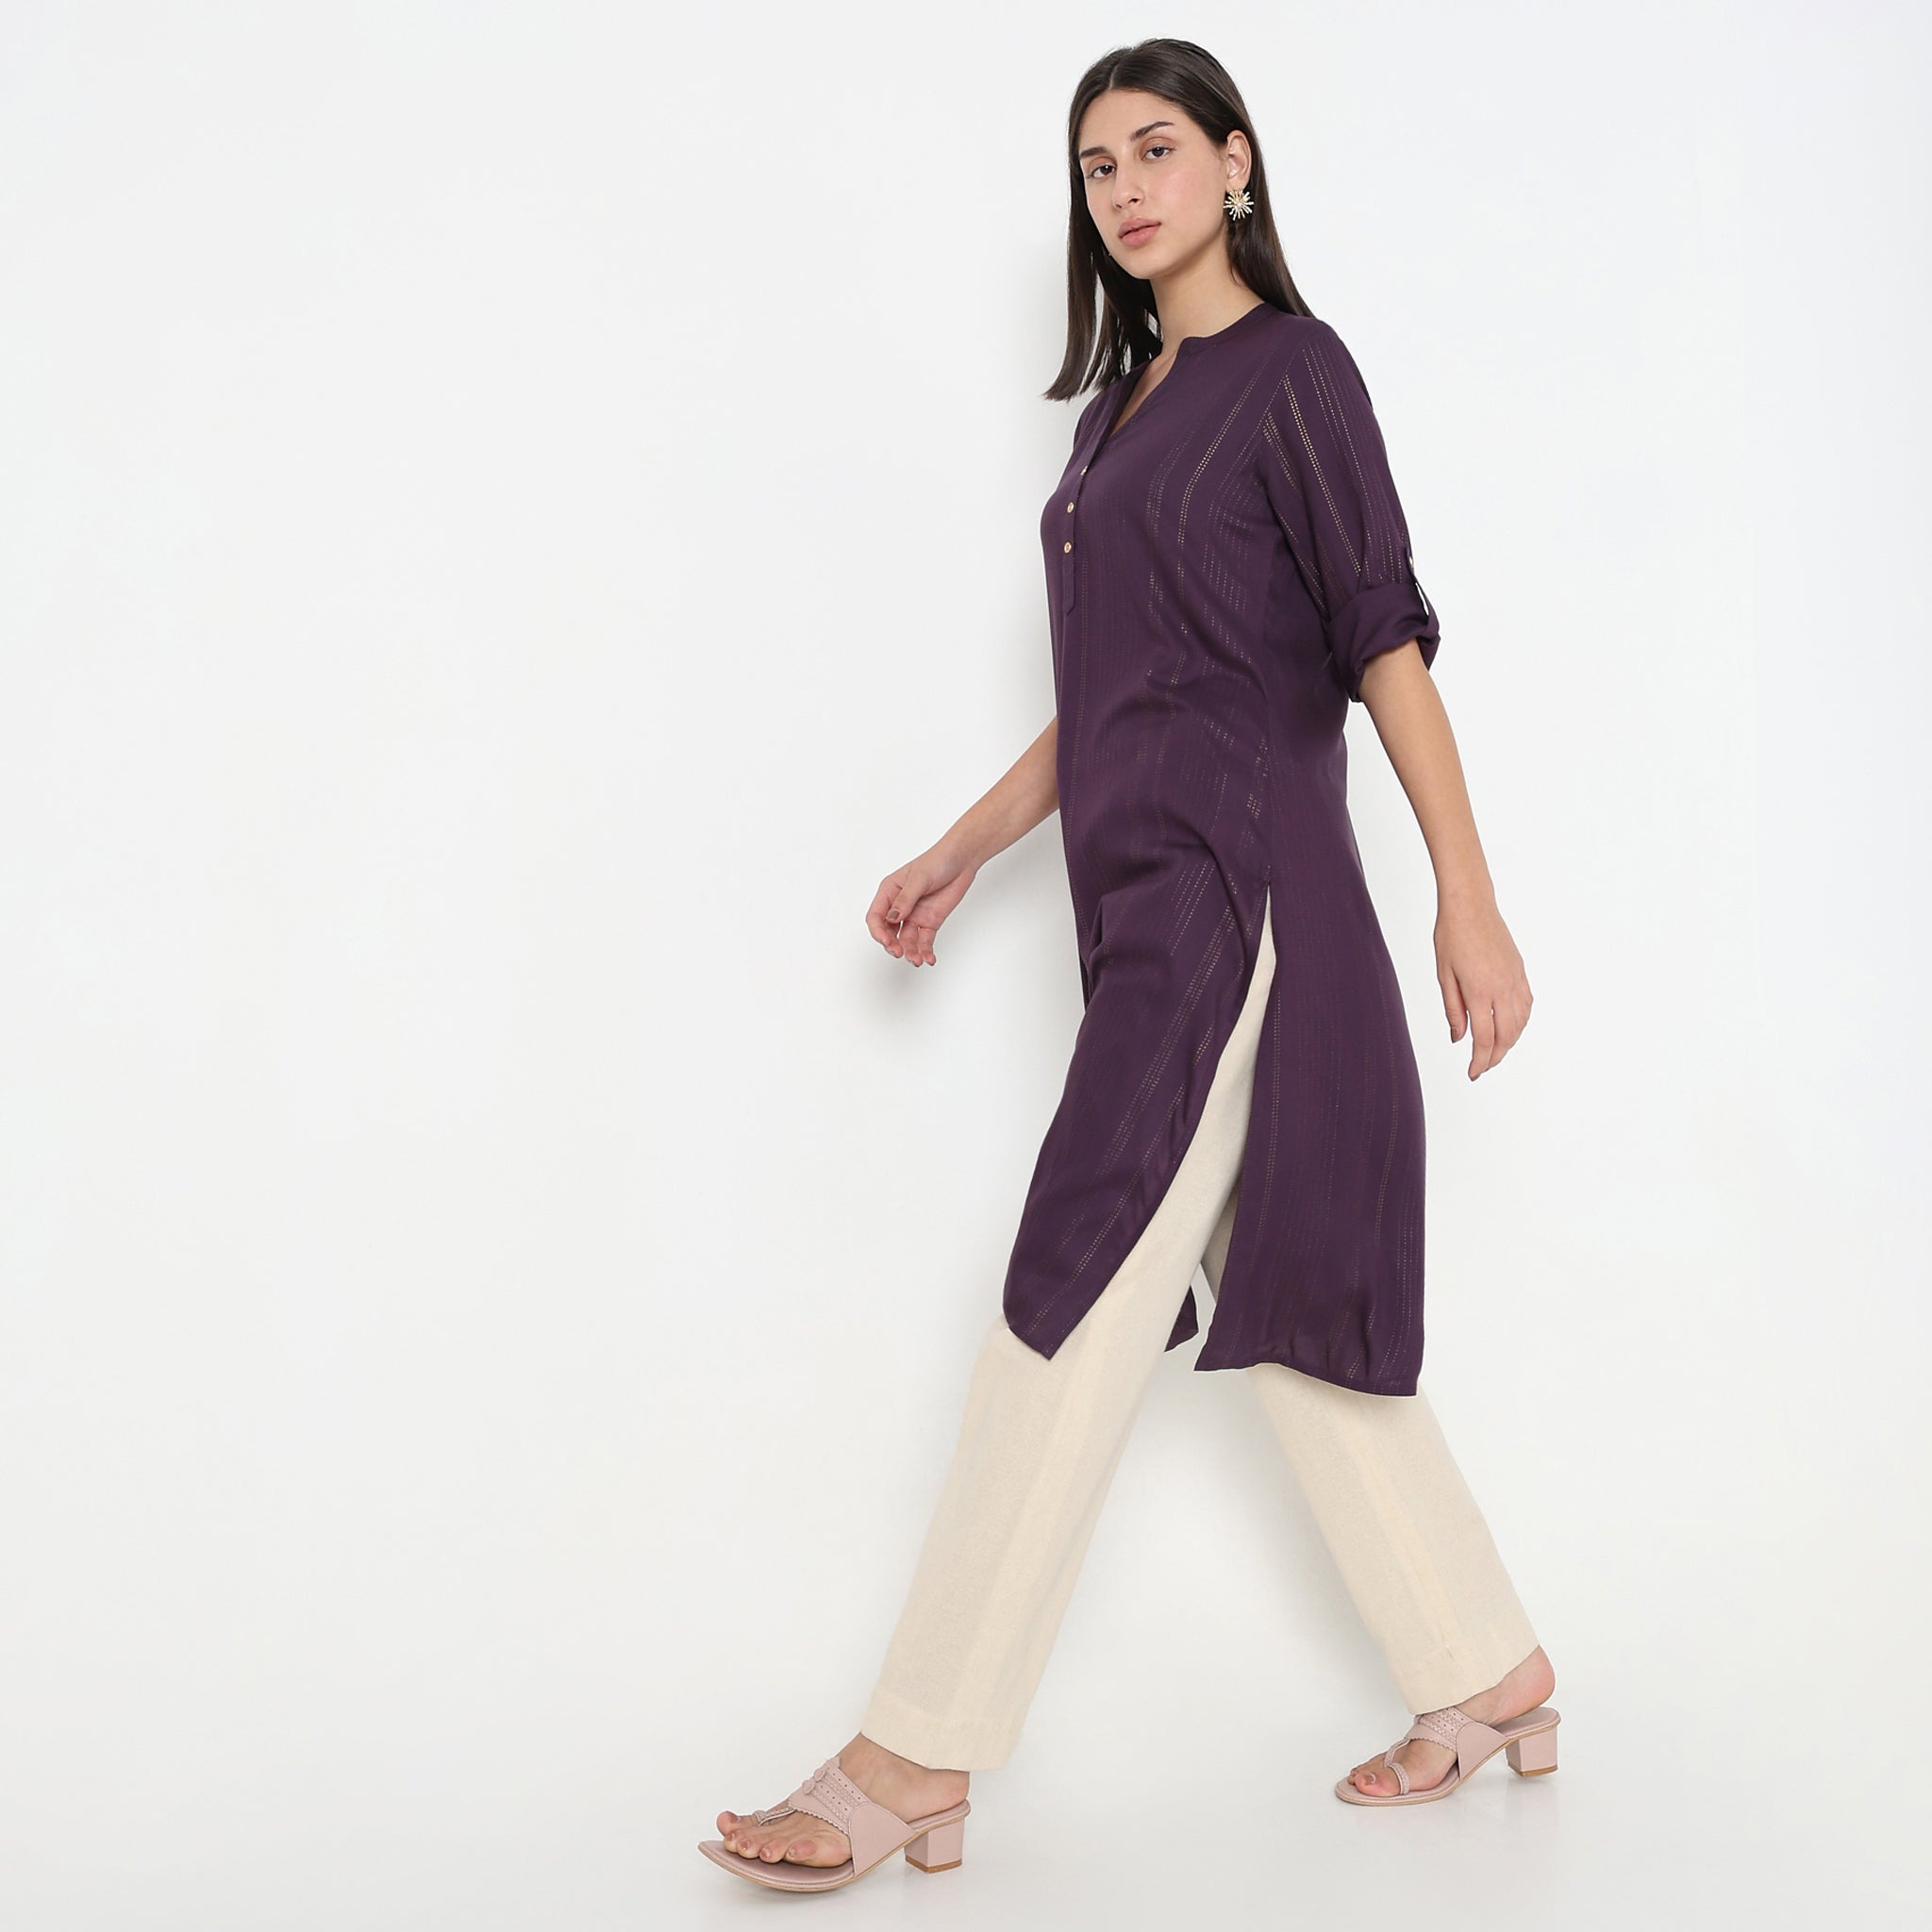  Ankle Length - Straight / Women's Kurtas & Kurtis / Women's  Indian Clothing: Clothing & Accessories